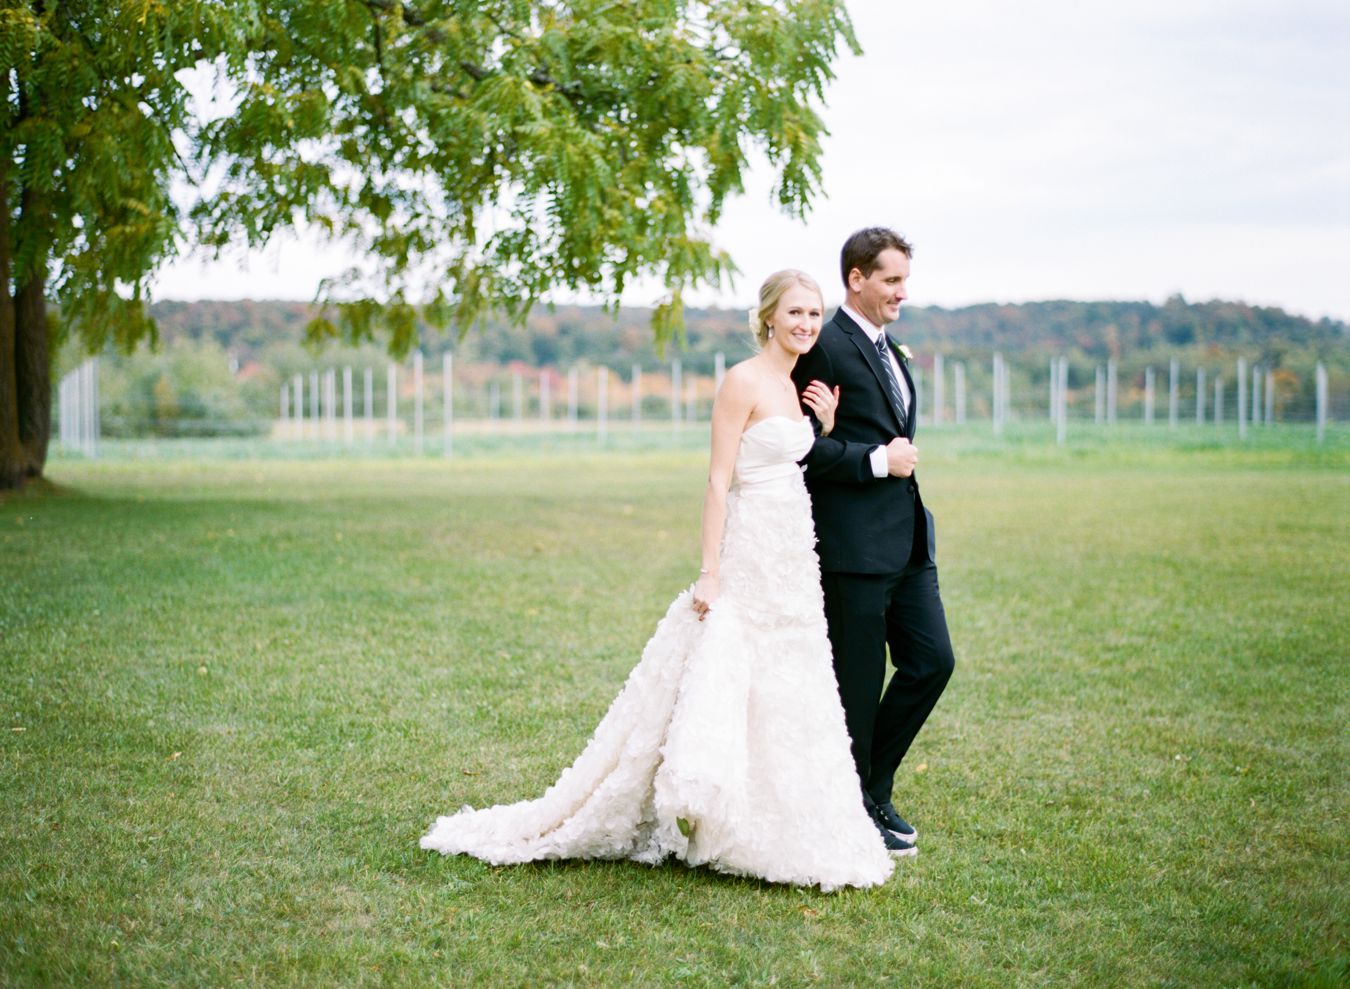 Leland Vineyard Wedding Photography | Aurora Cellars | Sincerely, Ginger Event Design & Production | Cory Weber Photography